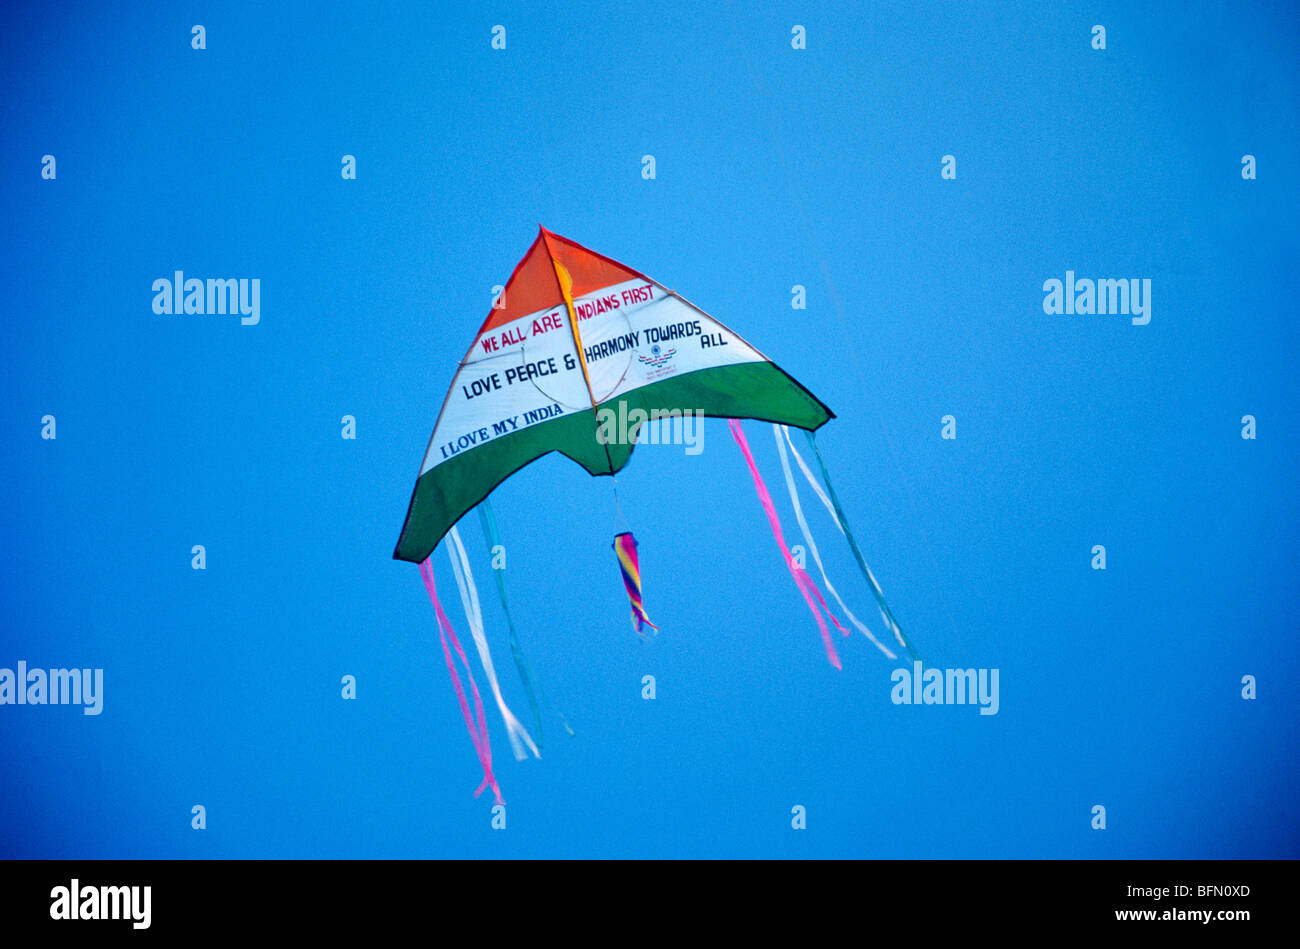 Kite festival mumbai india hires stock photography and images Alamy